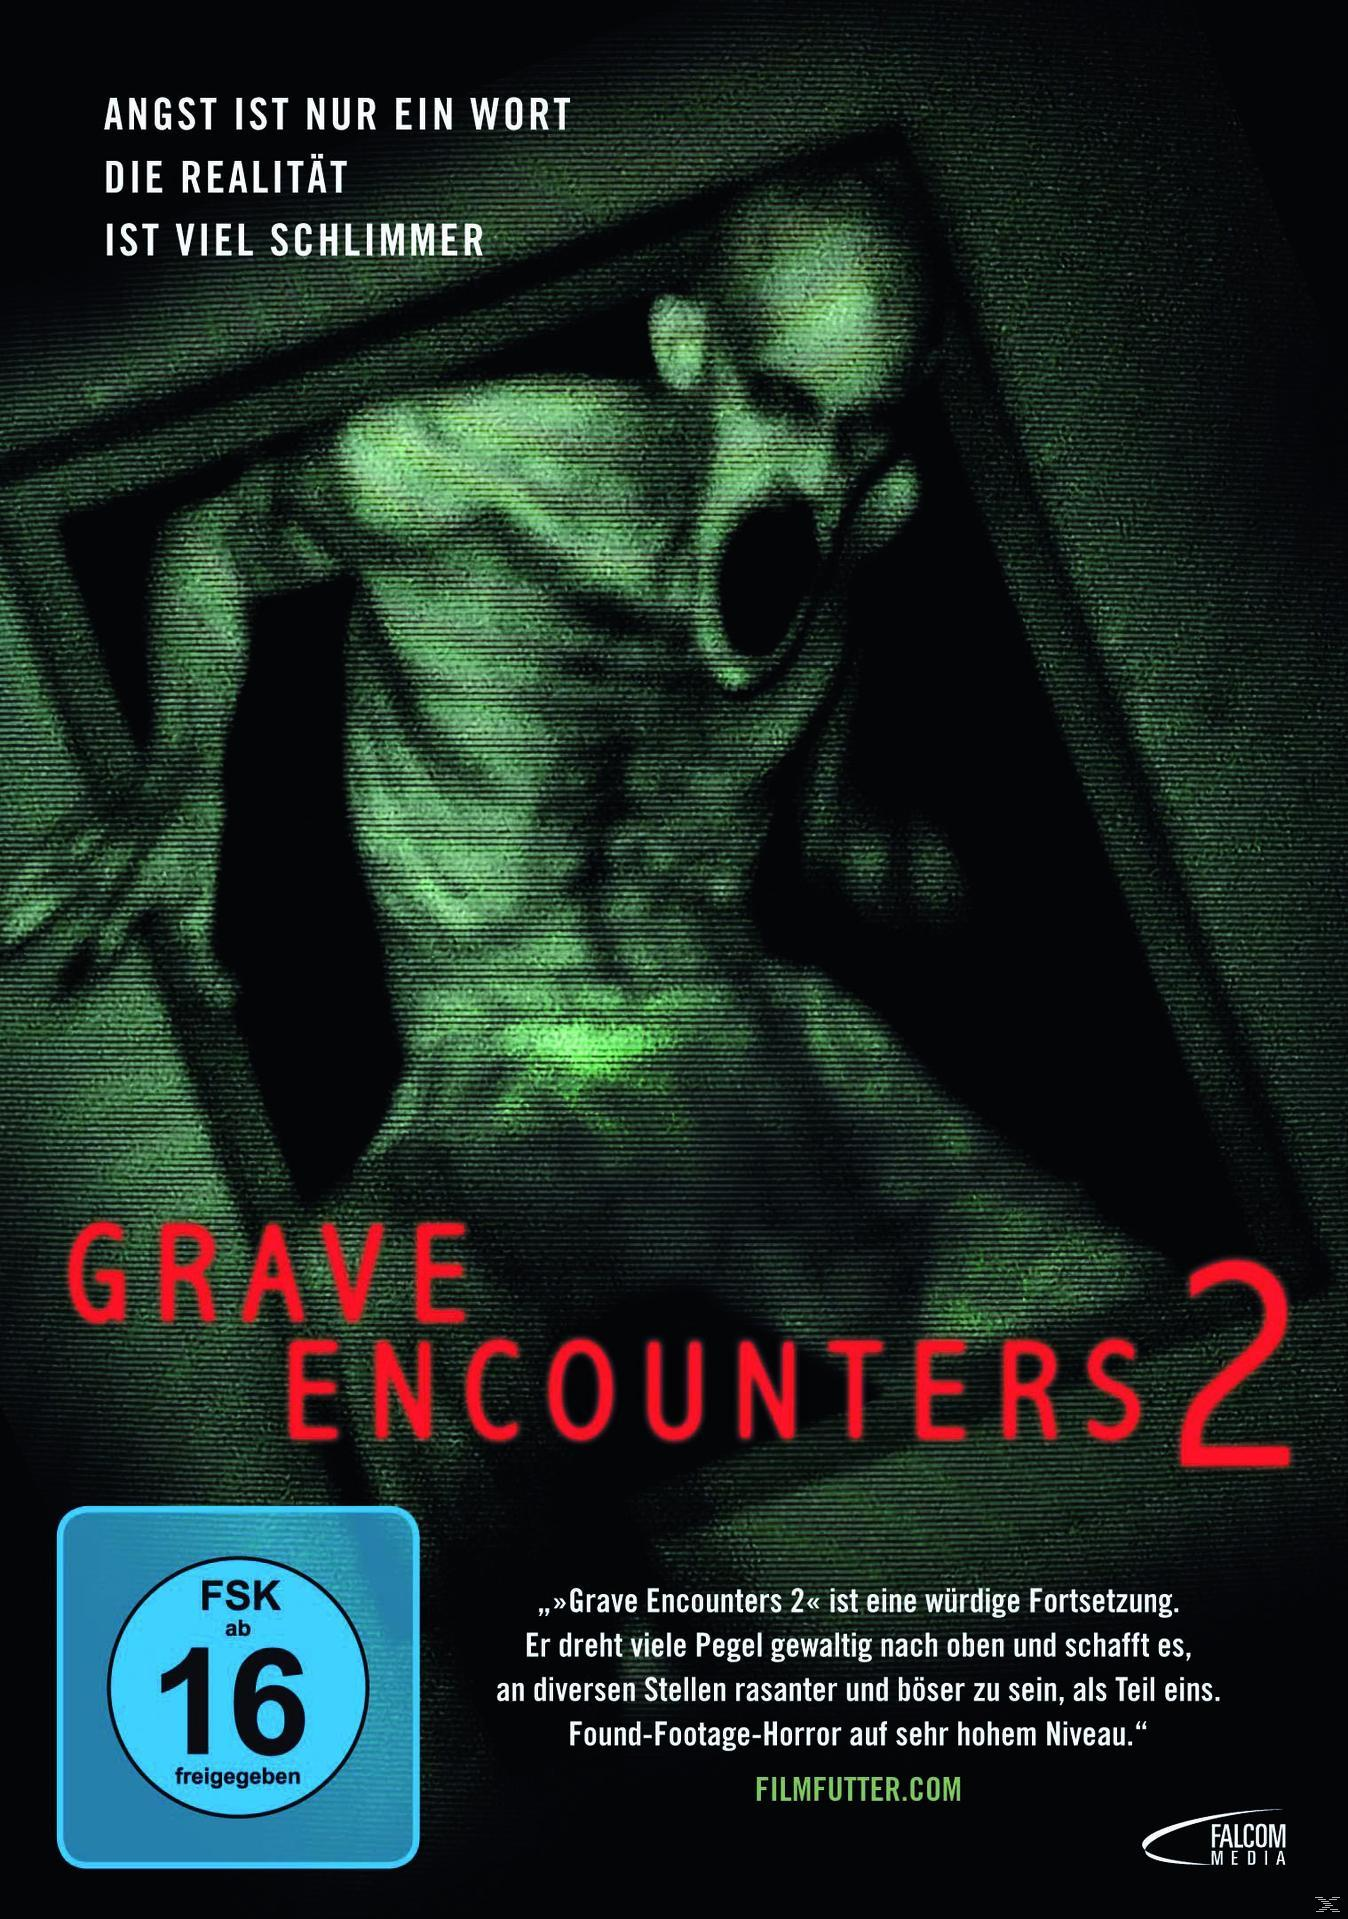 Encounters Grave 2 DVD